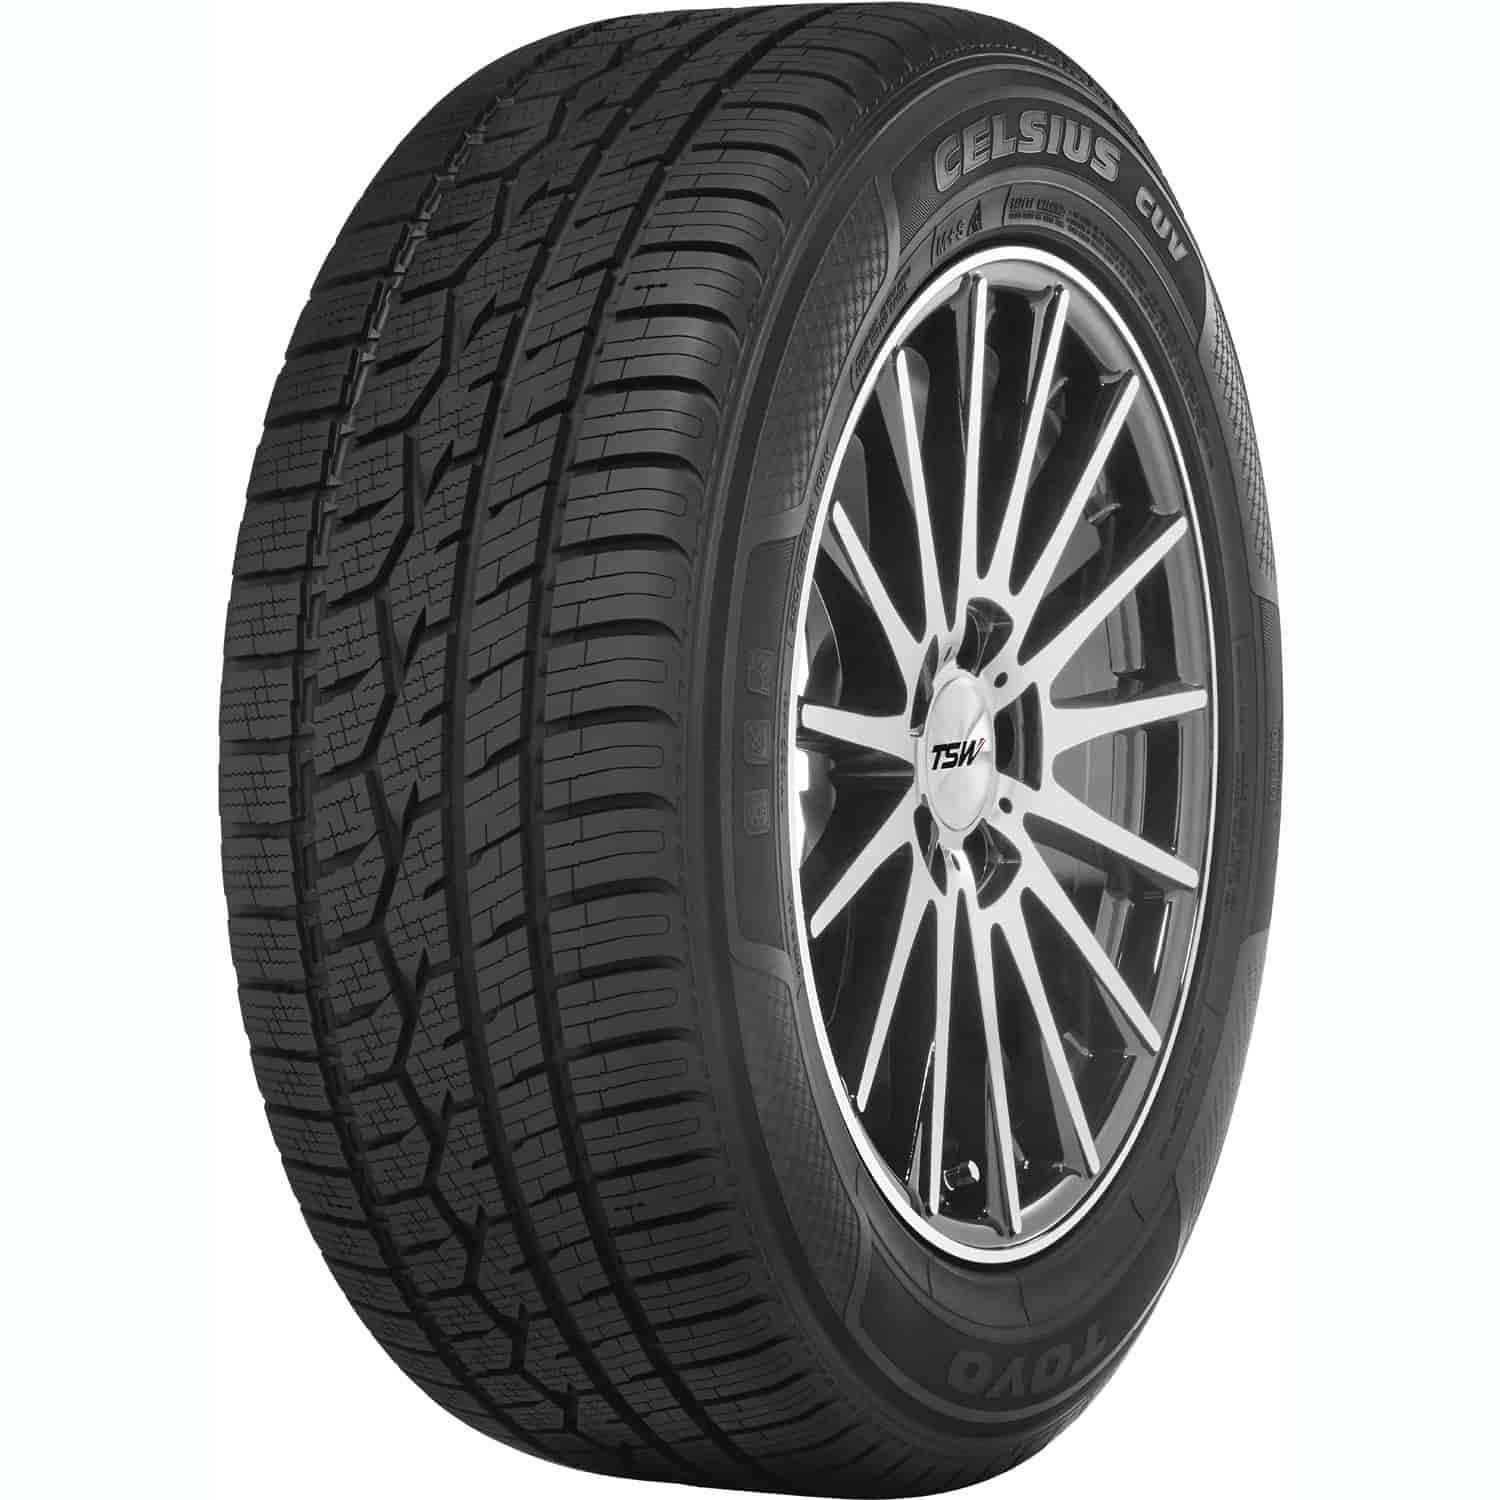 Celsius CUV Tire 265/70R17